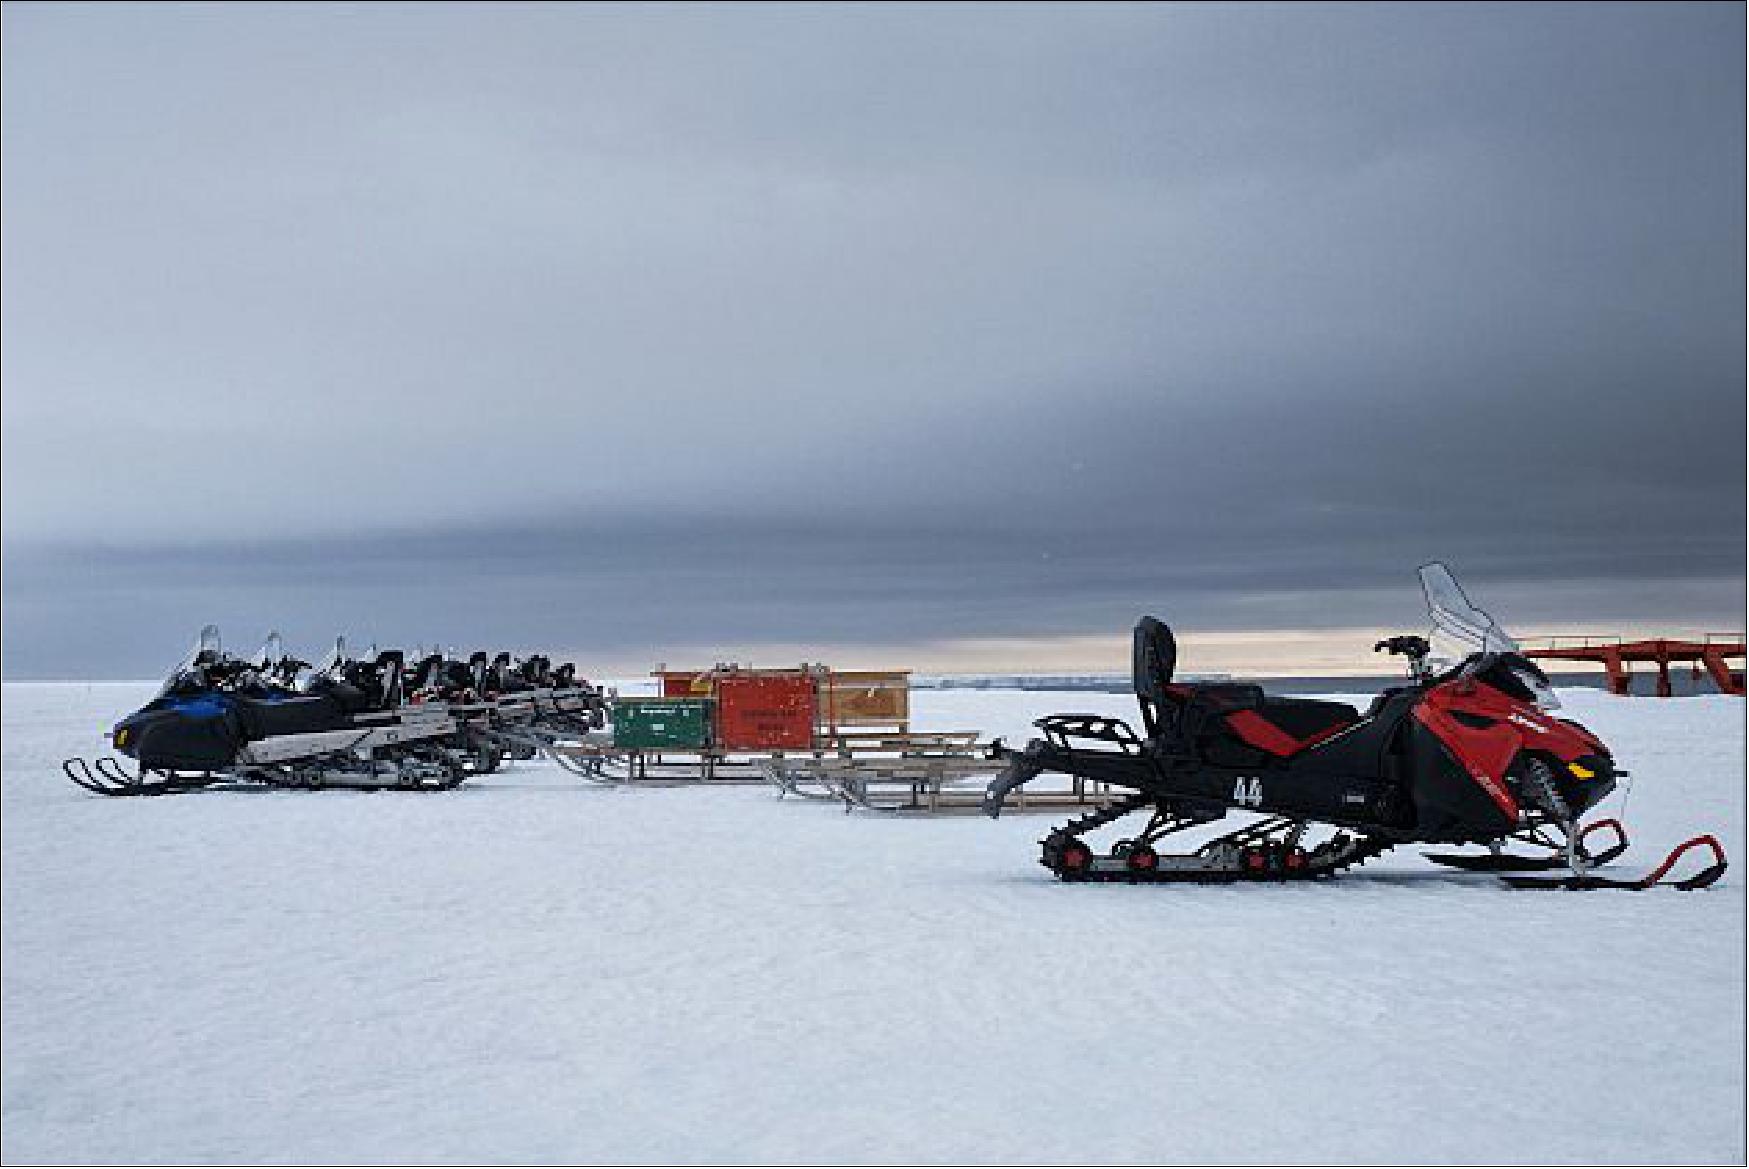 Figure 16: The snowmobile fleet parked next to Polarstern during cargo unloading (image credit: DLR/NASA/Jess Bunchek)